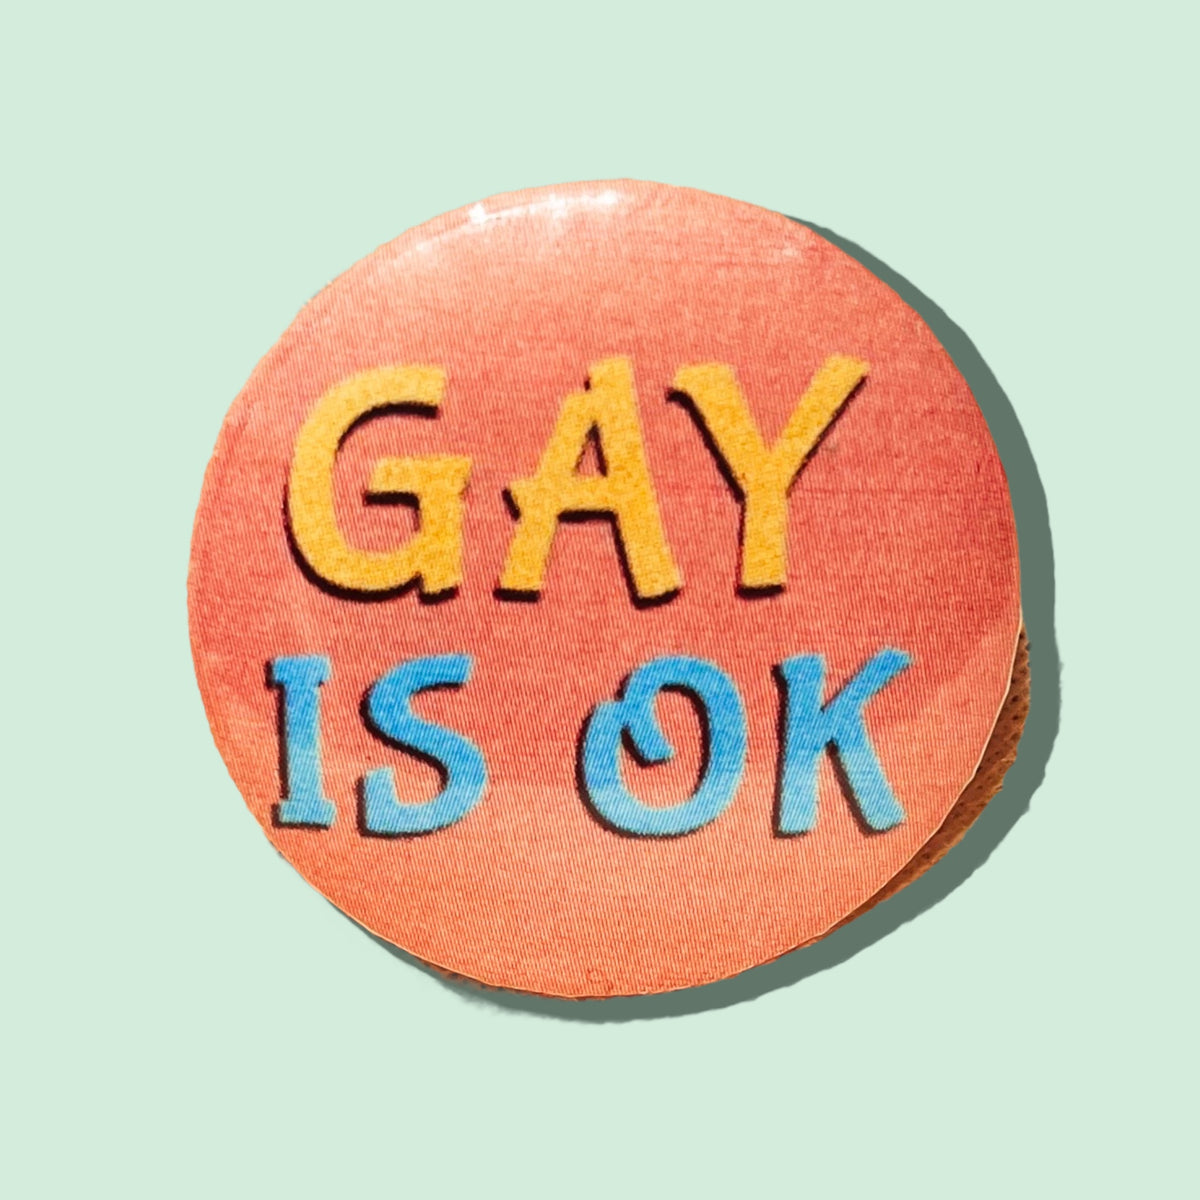 Pin - Gay is OK - Helpfully